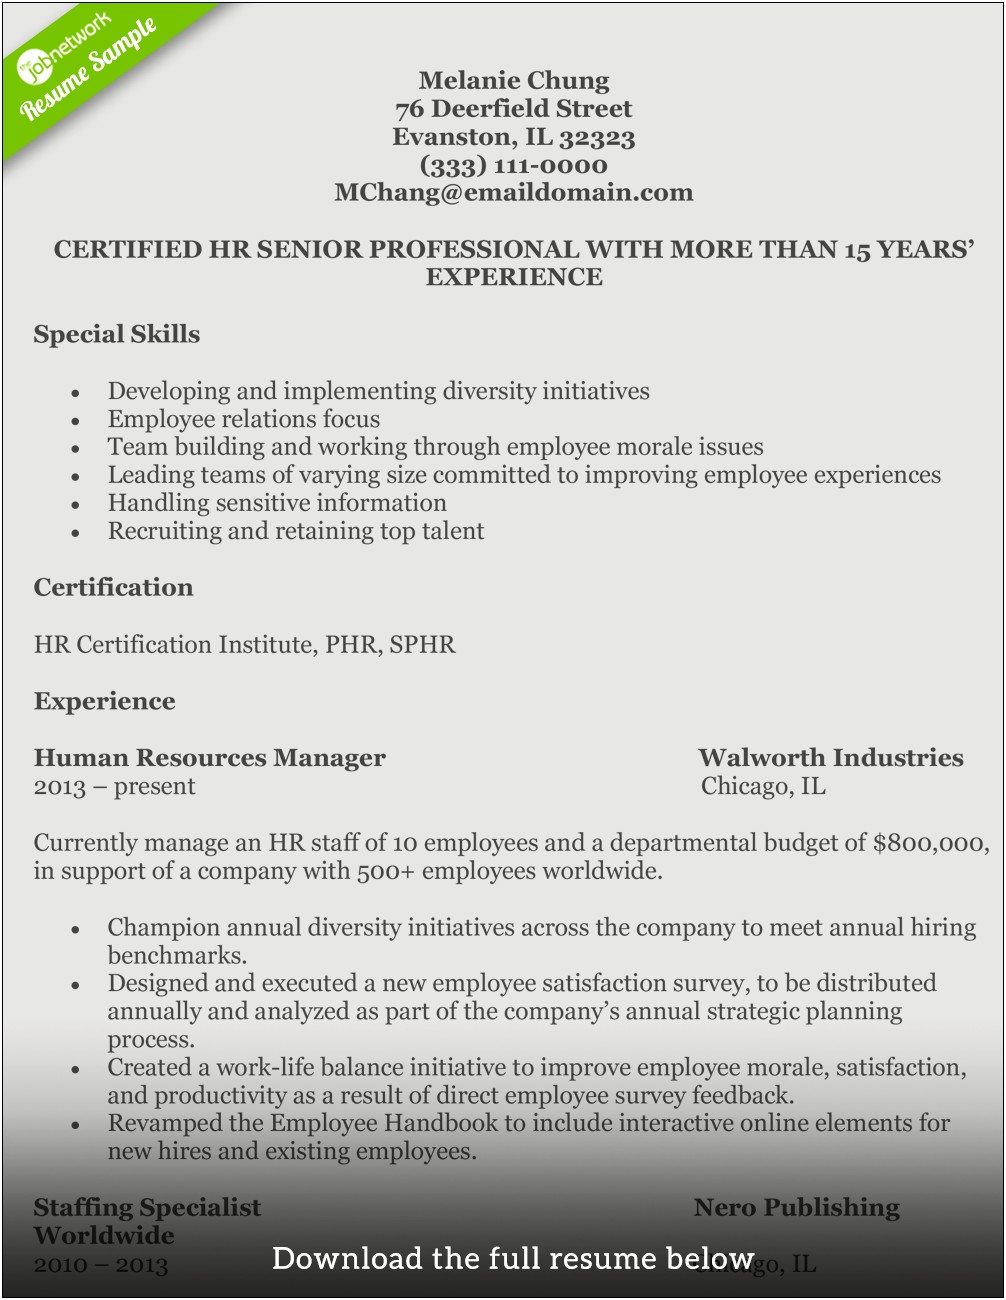 Hr Specialist Skills For Resume